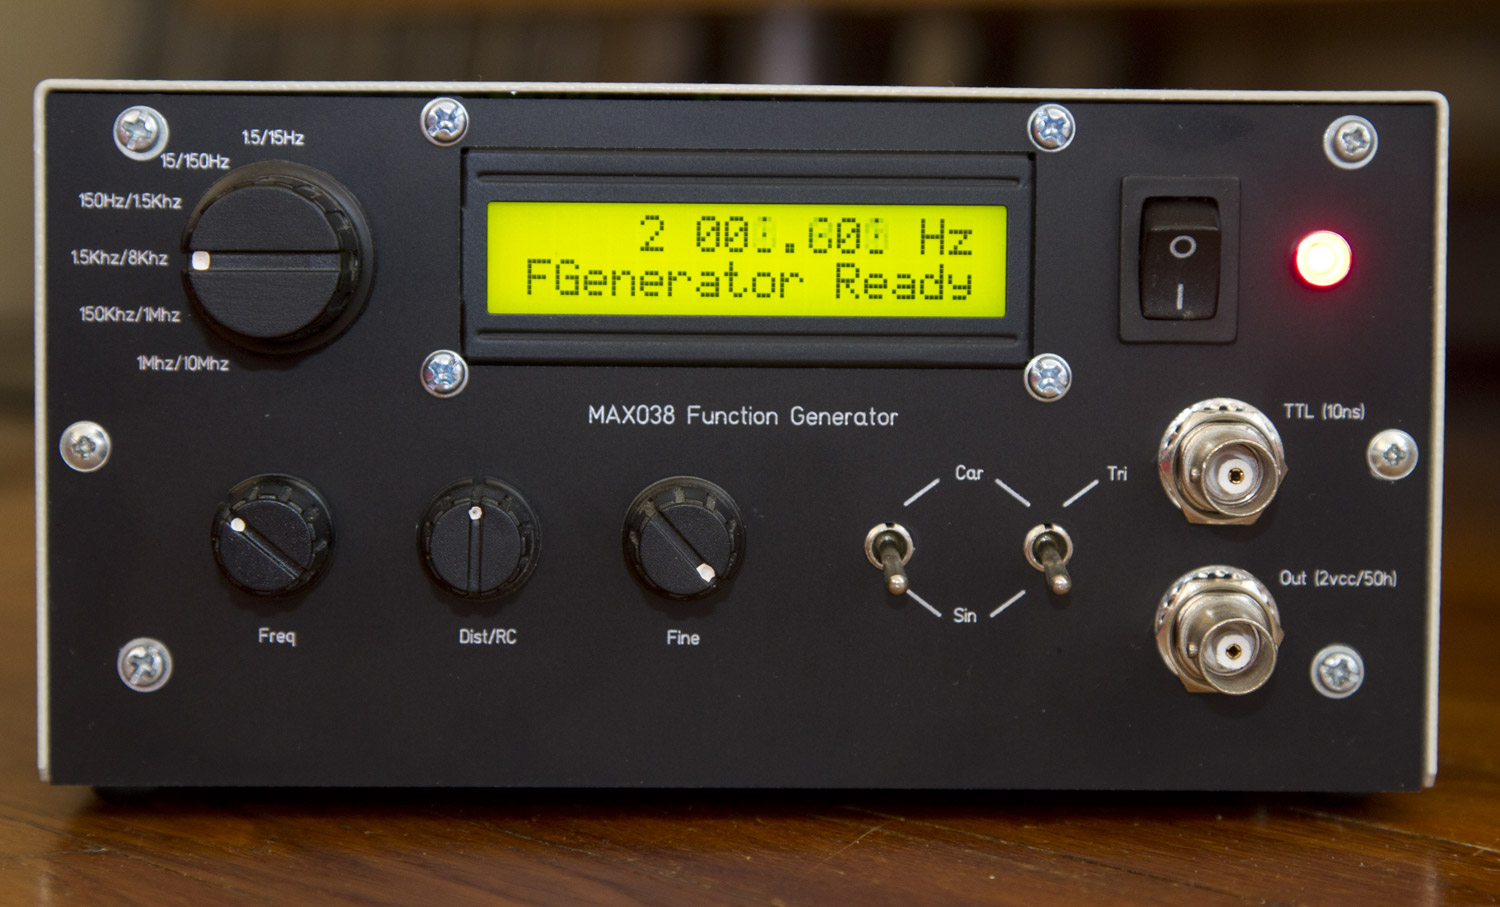 Max038 function lab generator